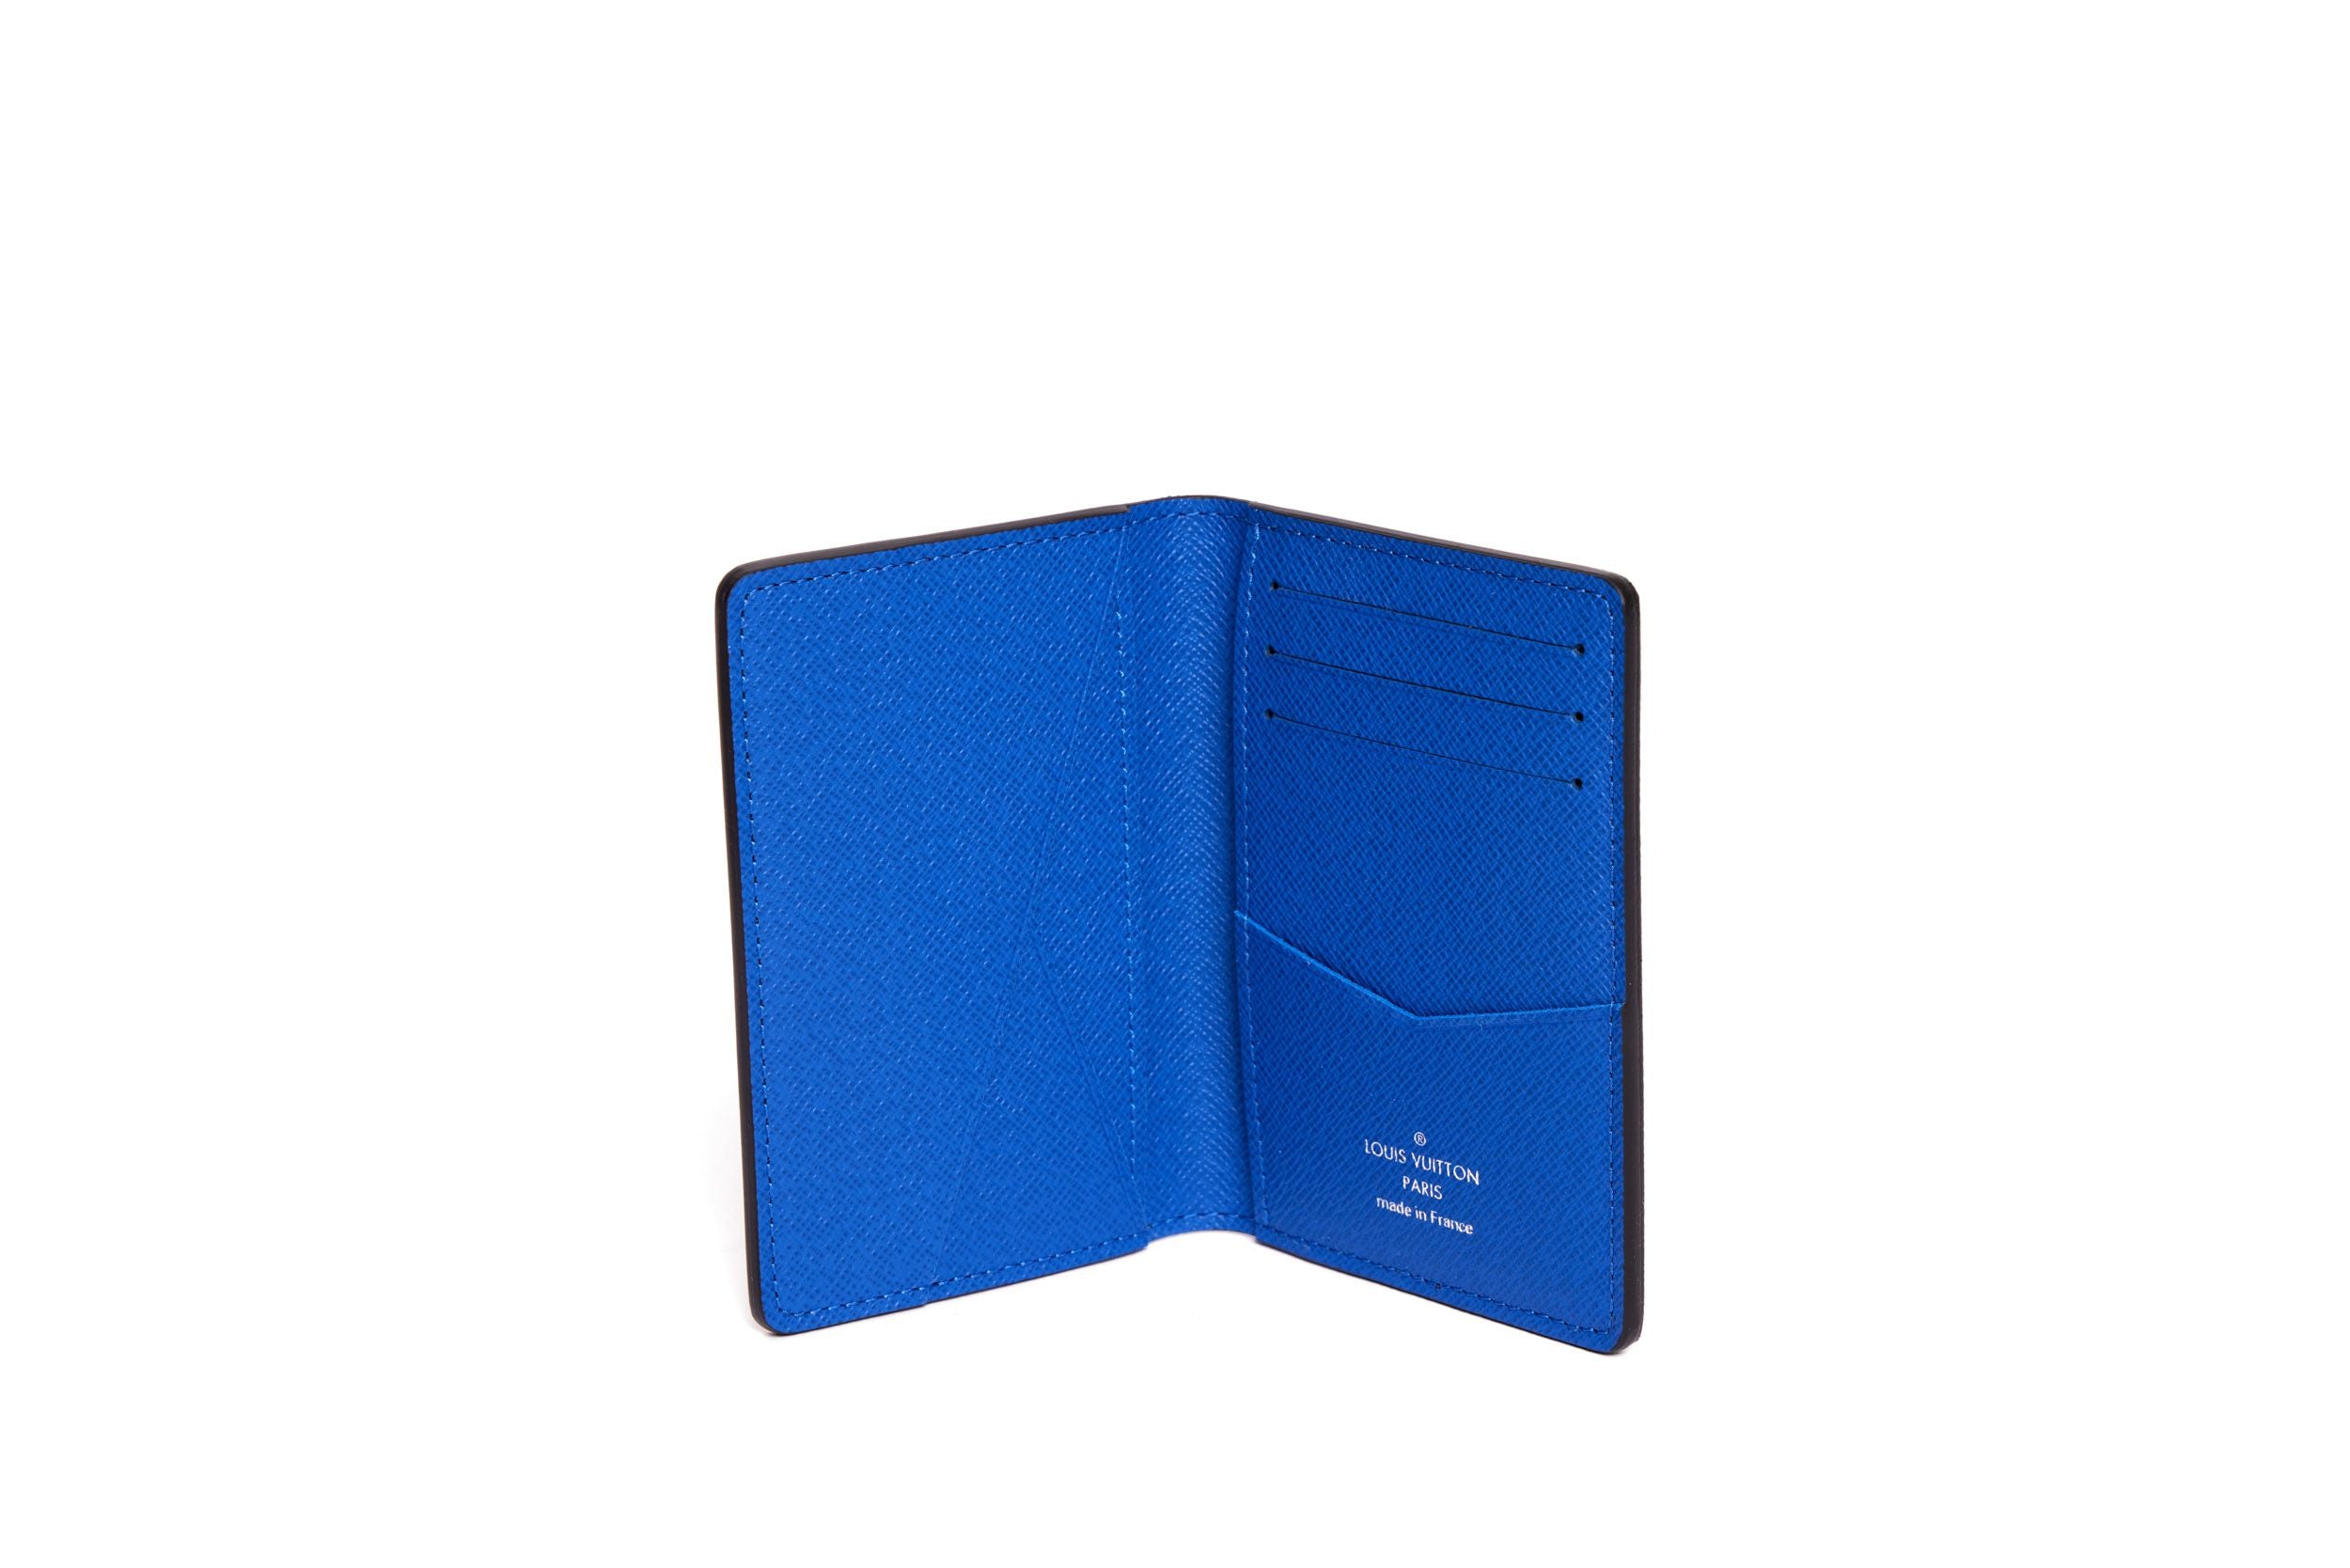 Louis Vuitton Pocket Organizer Monogram Blue in Coated Canvas - US